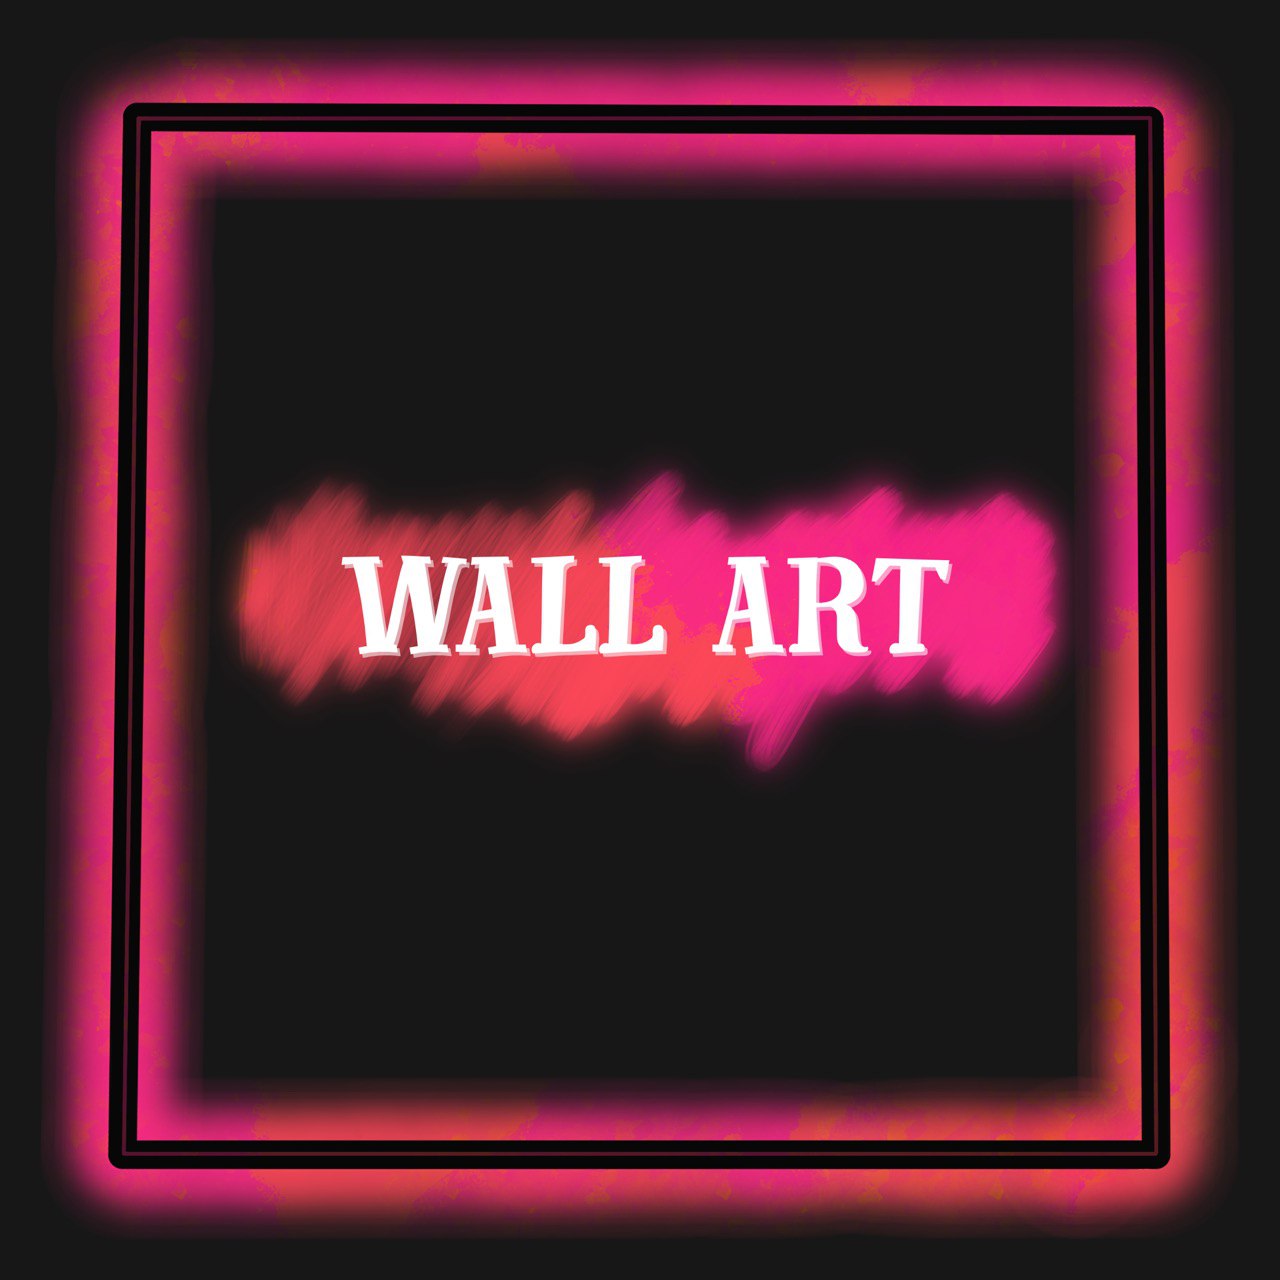 wall art